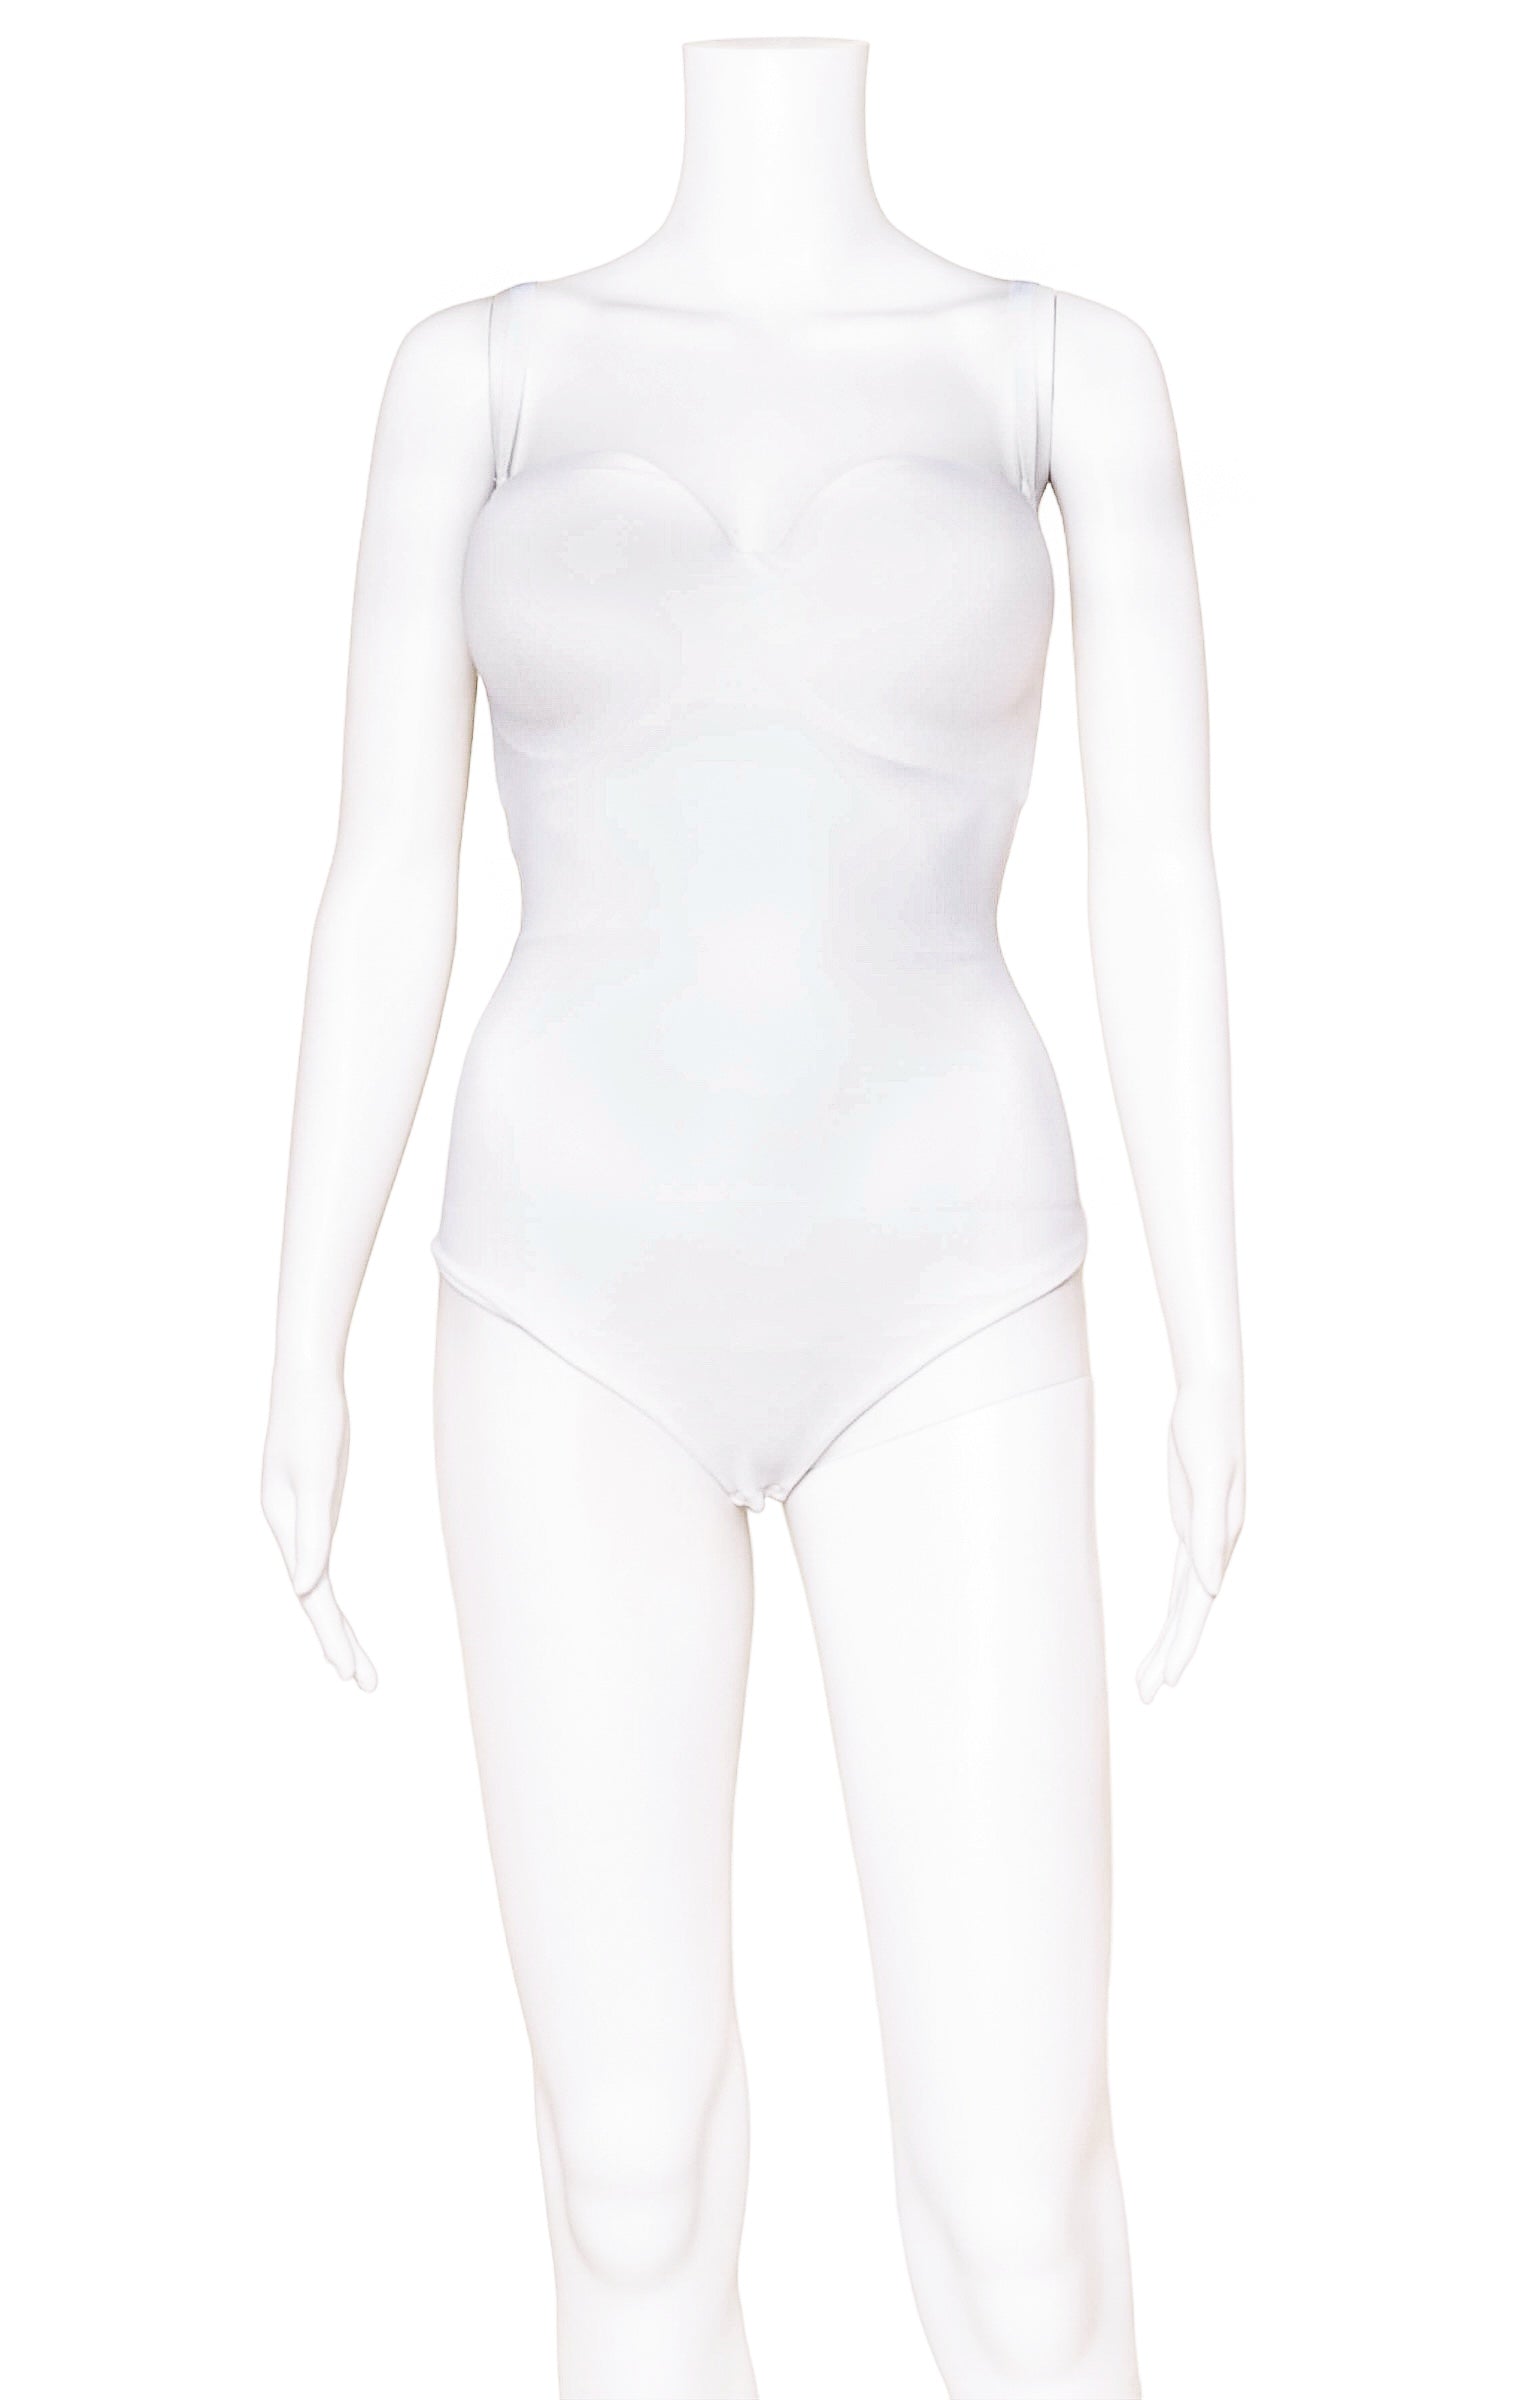 WOLFORD Bodysuit / Shapewear Size: M / D Cup – Kardashian Kloset